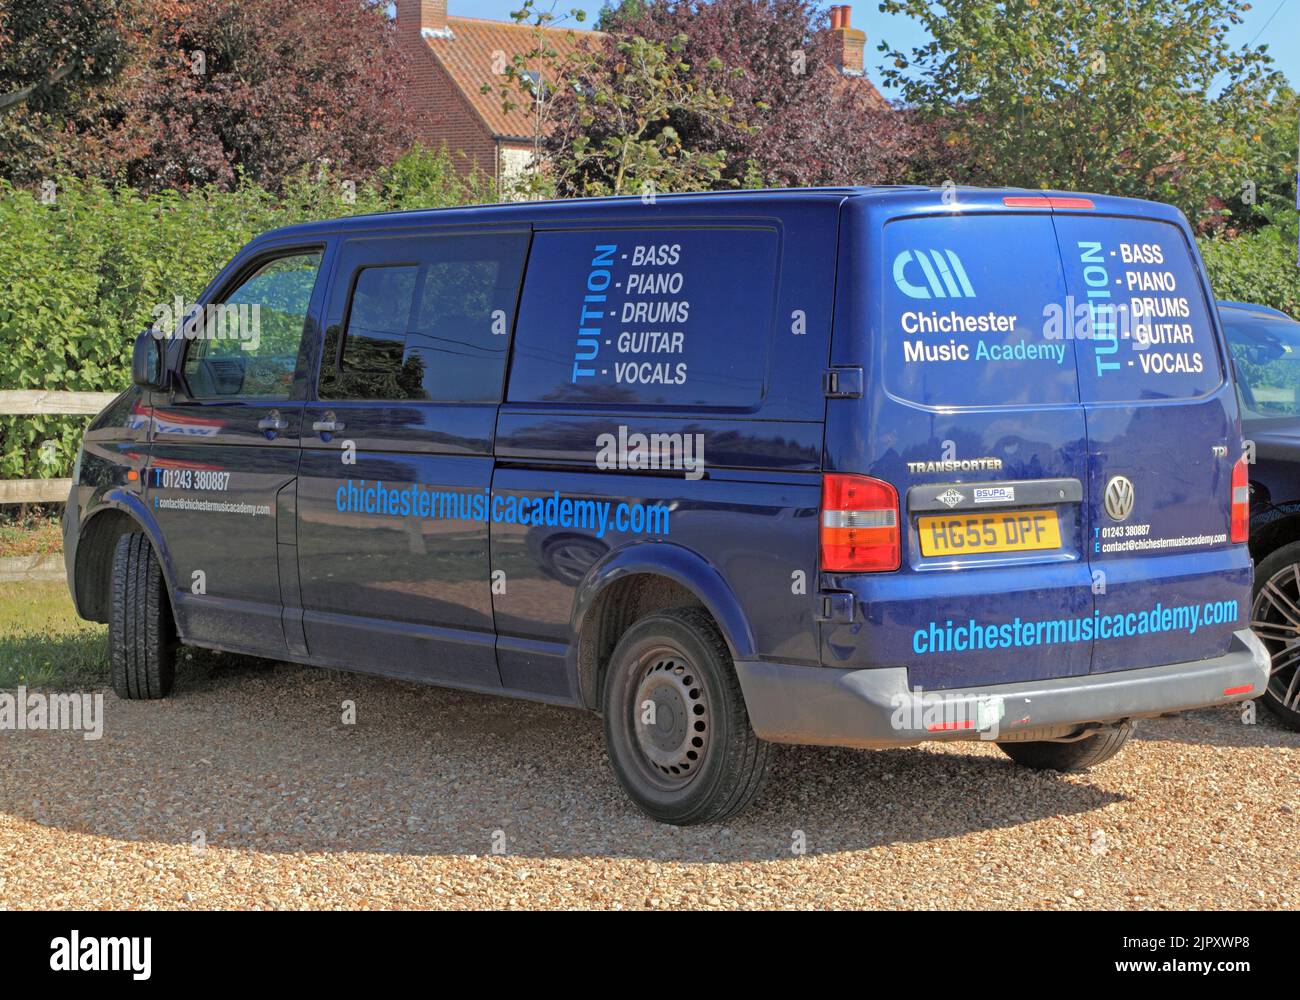 Chichester Music Academy, transport vehicle, van, truck, England, UK Stock Photo